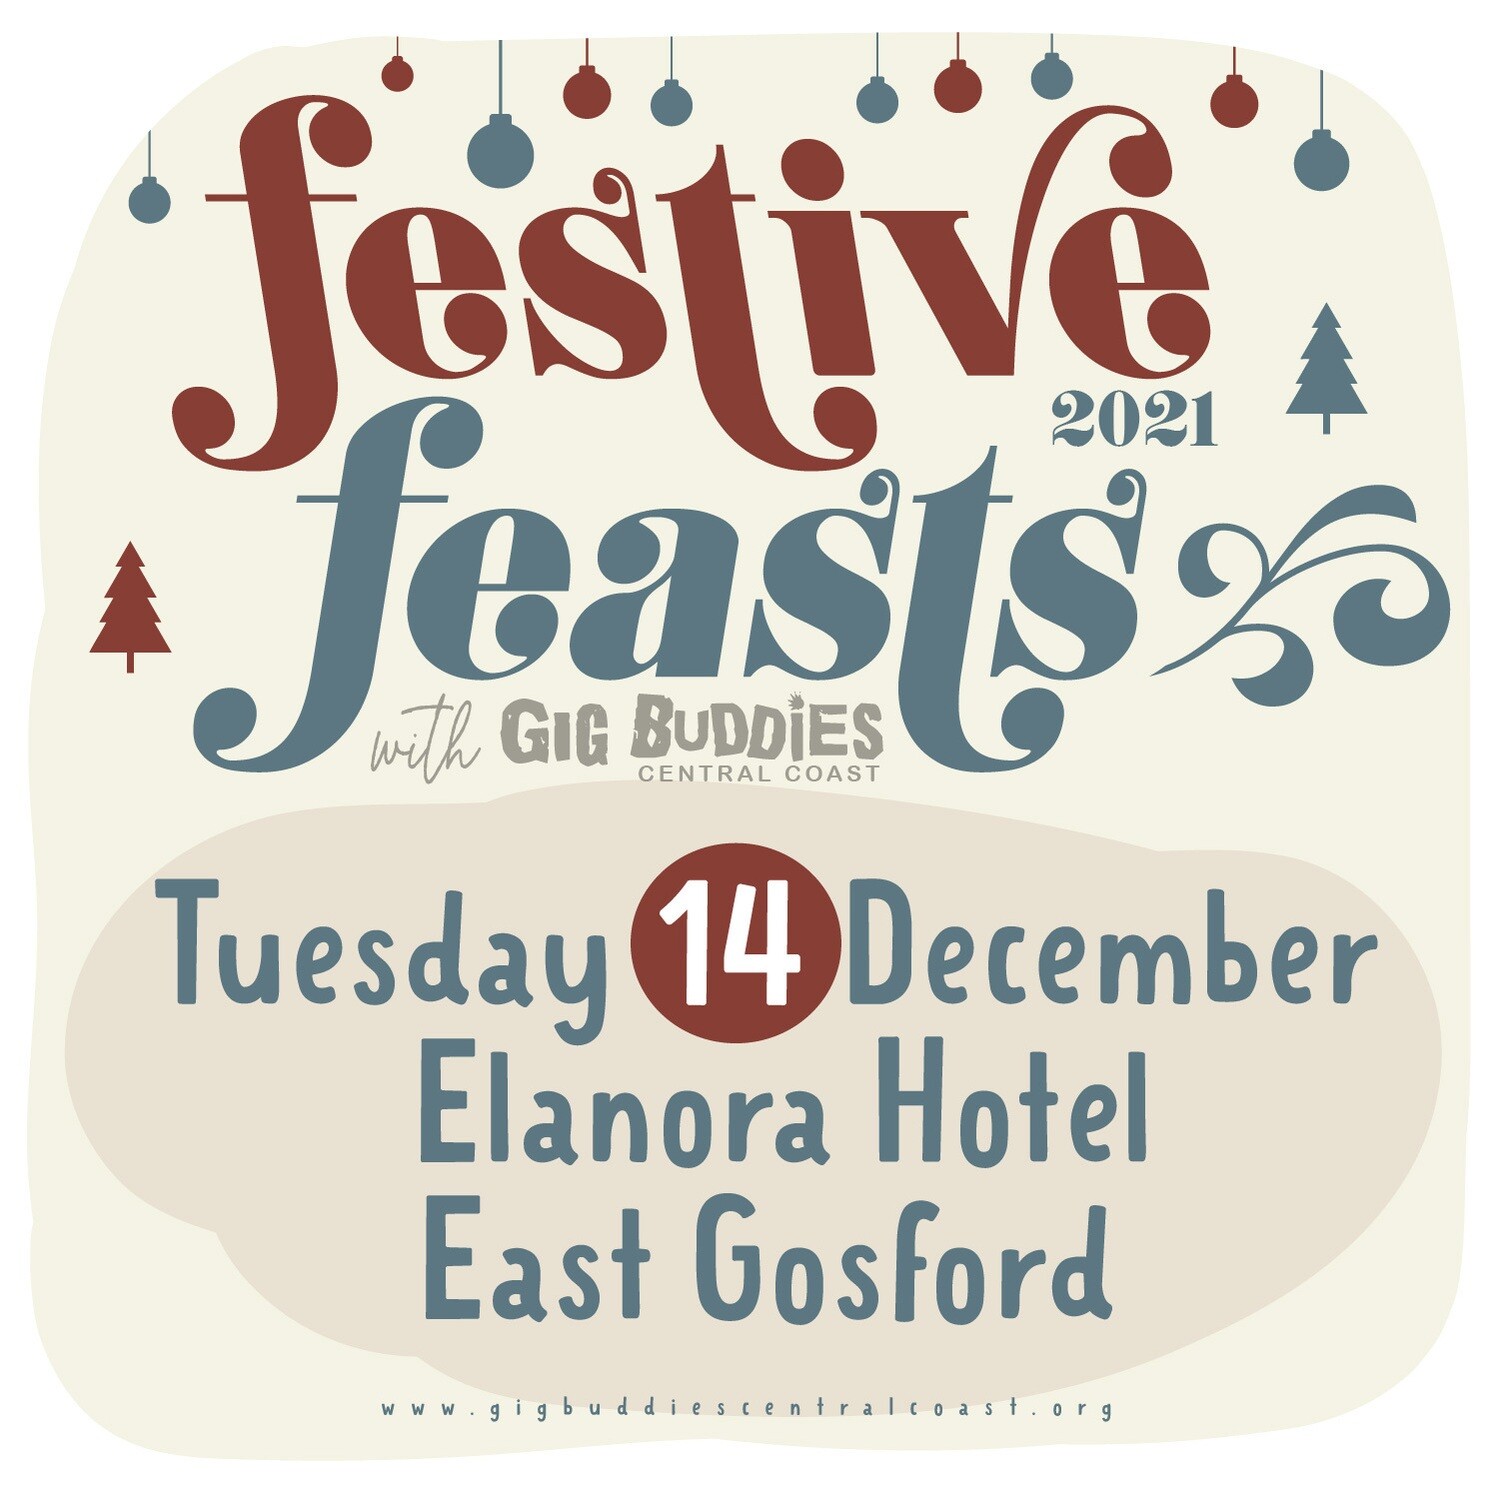 Gig Buddies Central Coast festive gathering @ Elanora Hotel, East Gosford - Tuesday 14 December